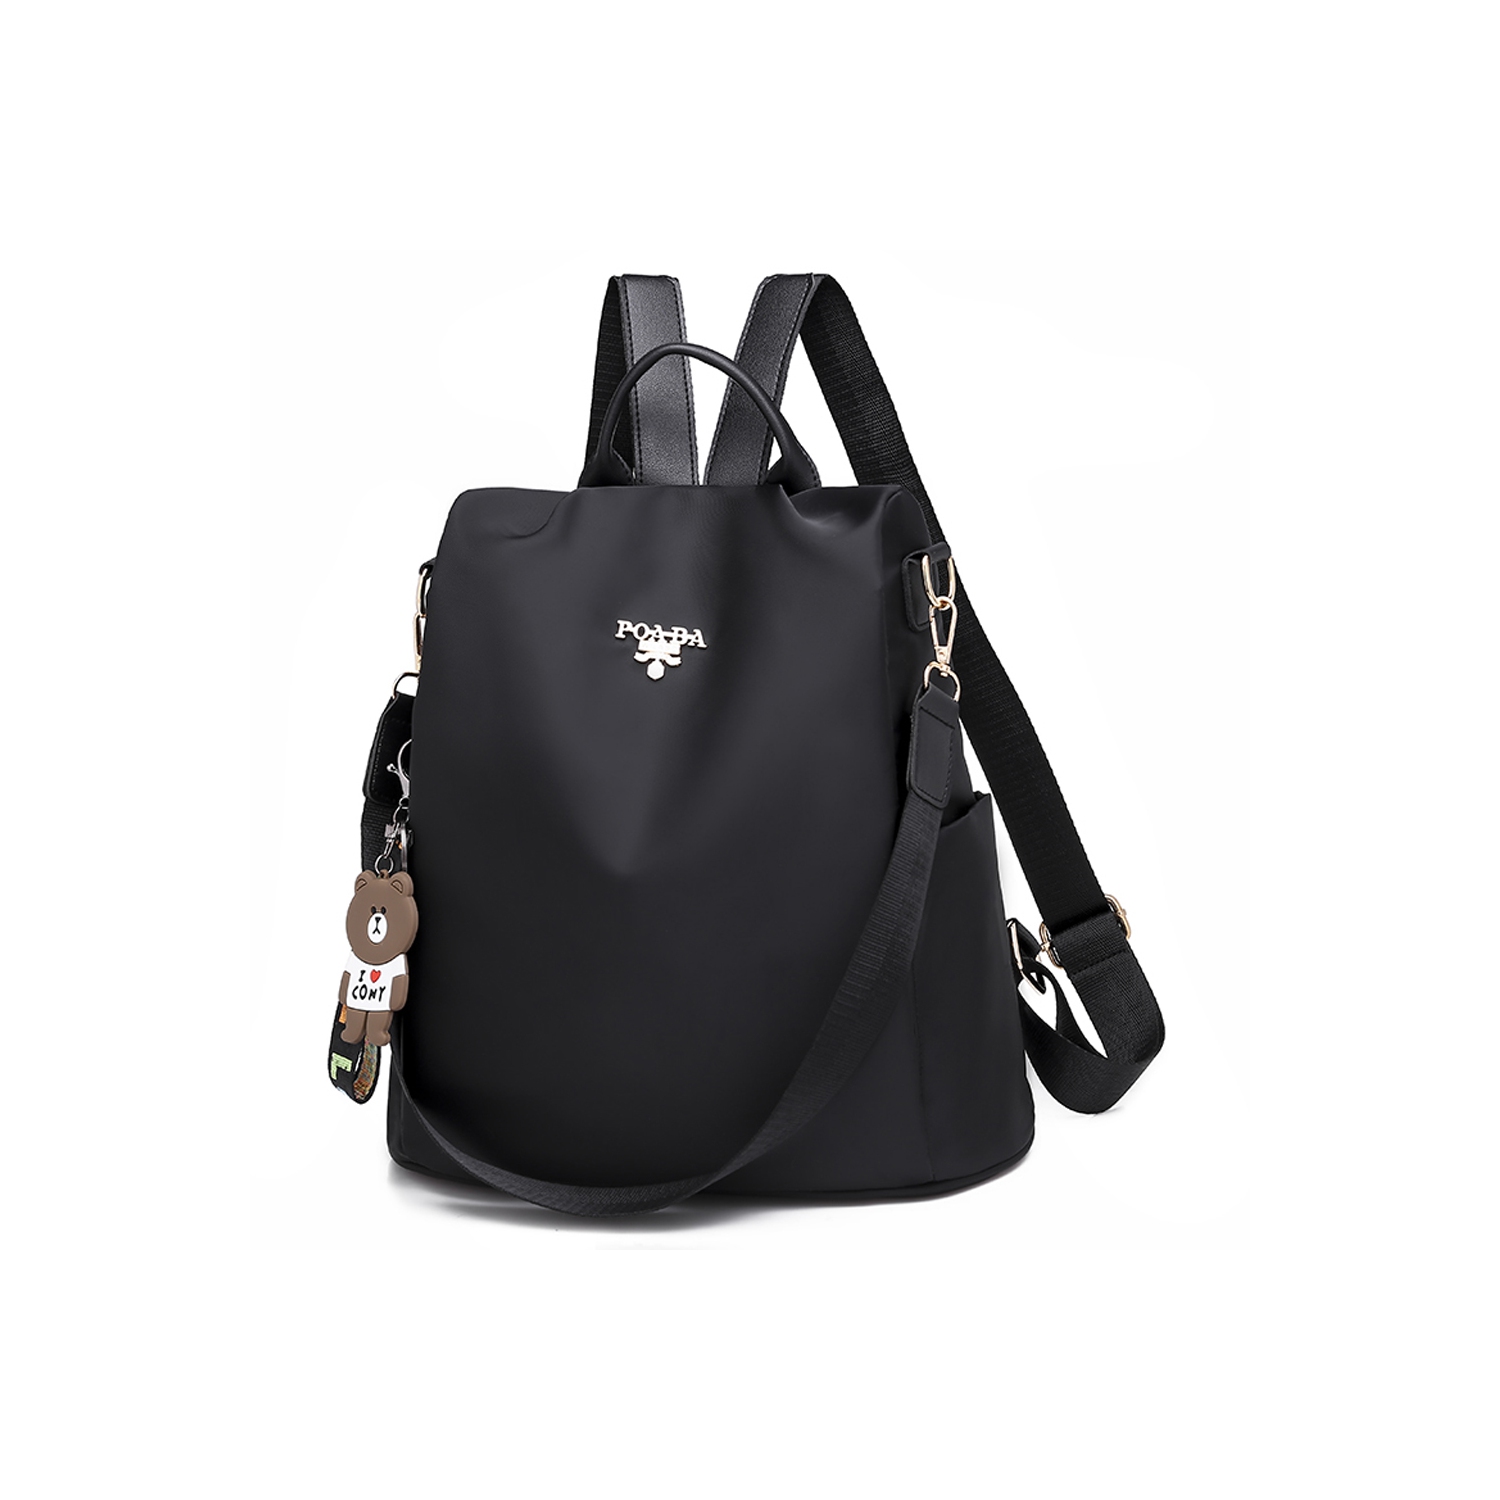 navor Anti-Theft Backpack for Girls/Women Waterproof Daypack Casual Convertible Business/Travel Backpack/Handbag -Black